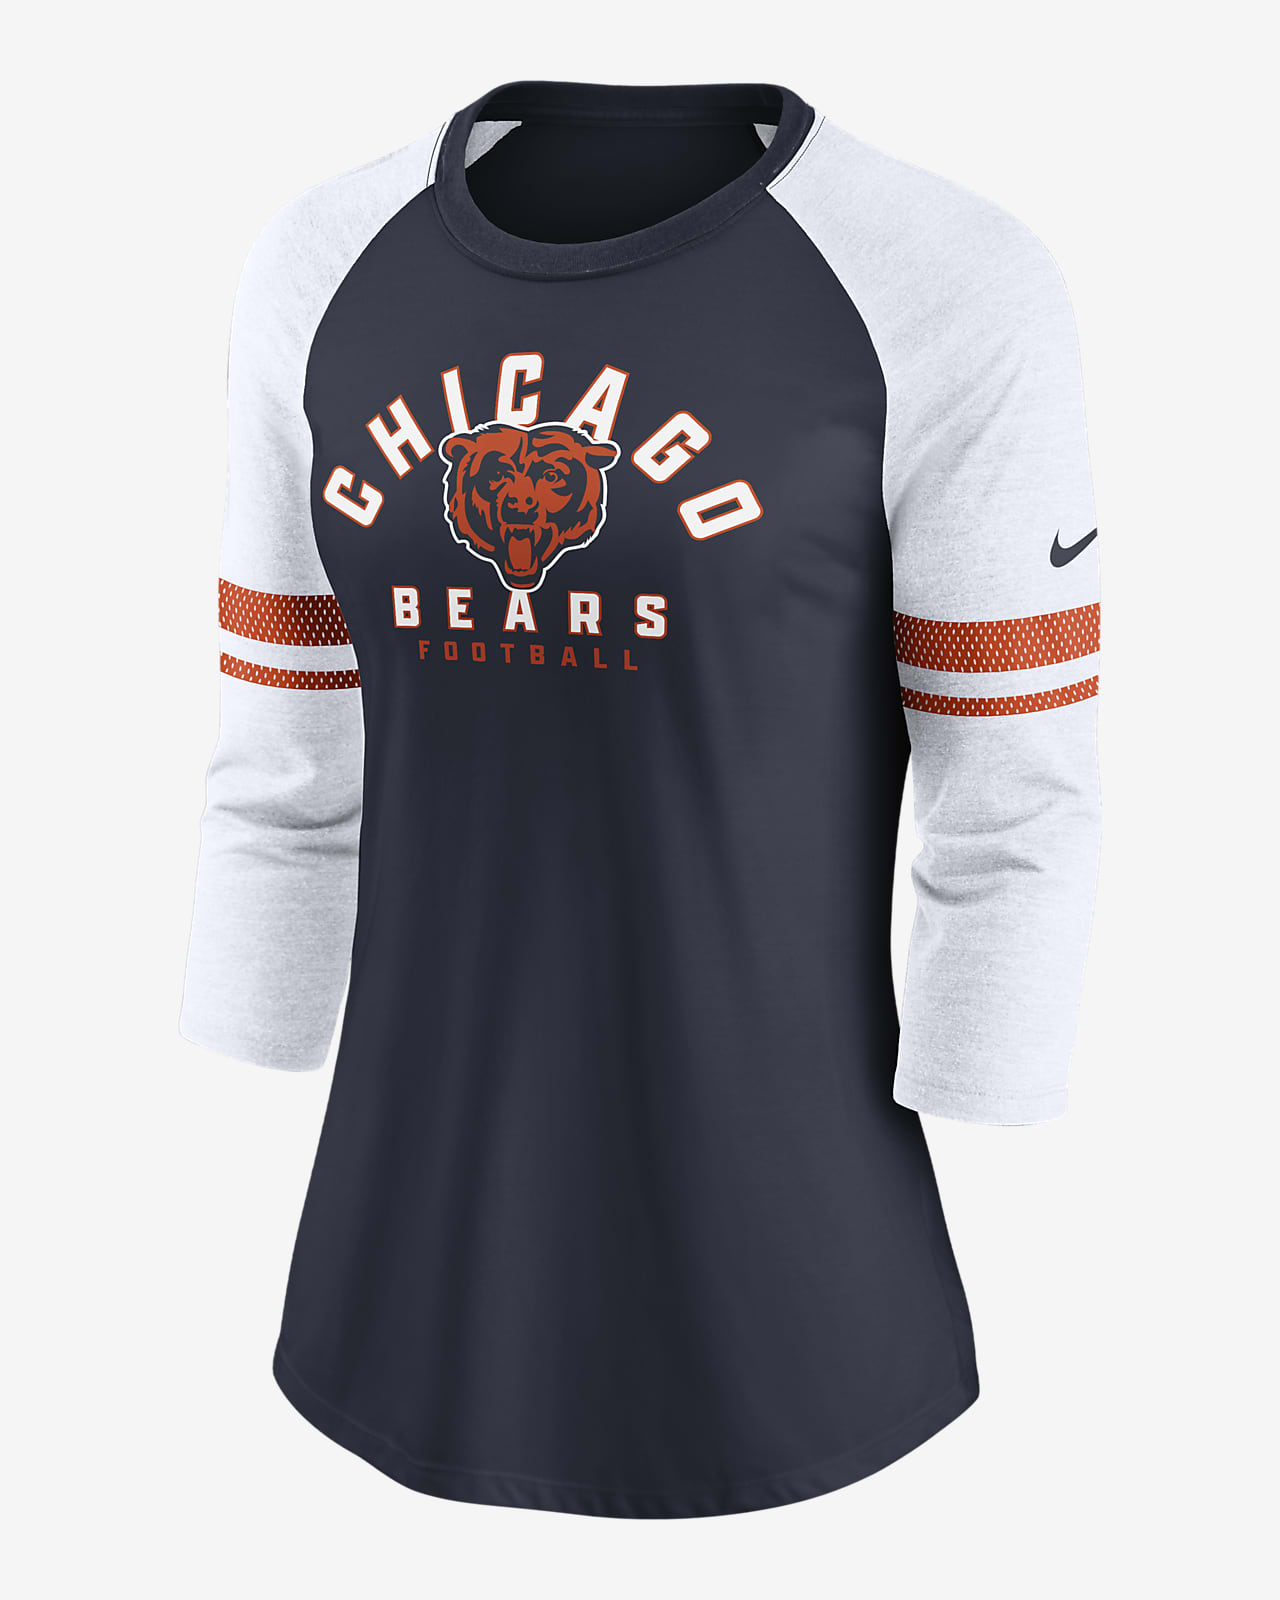 chicago bears women's long sleeve shirt